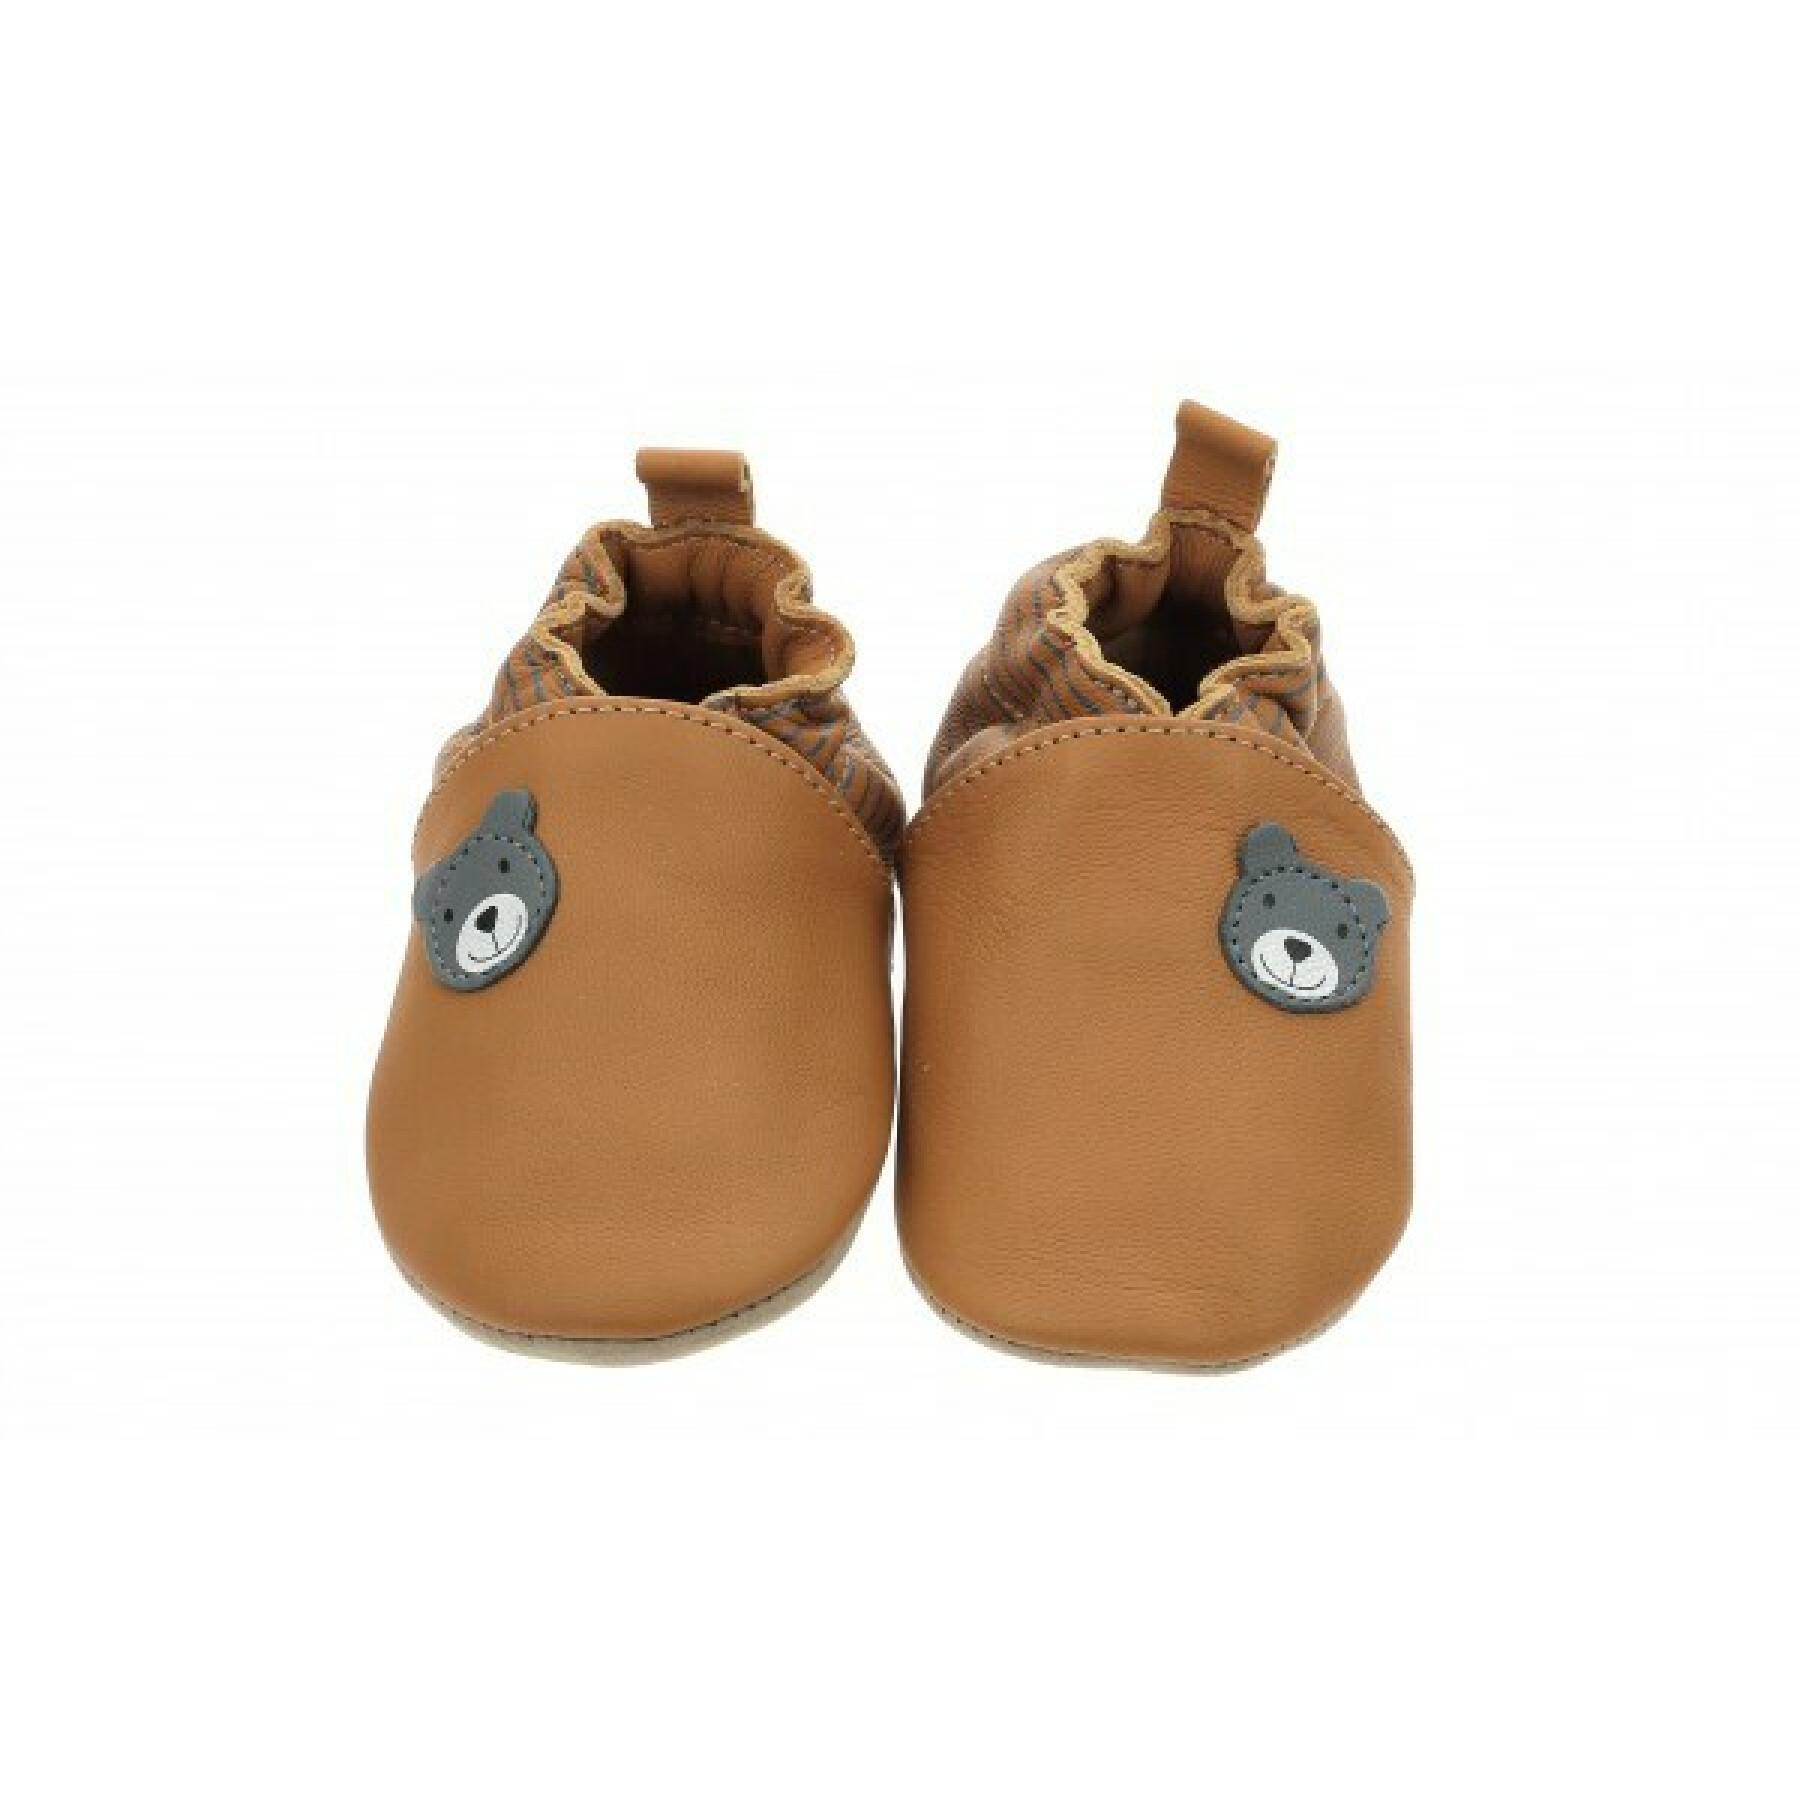 Voorzien organiseren Licht Baby slippers Robeez doubear camel - Slippers - Shoes - Kids